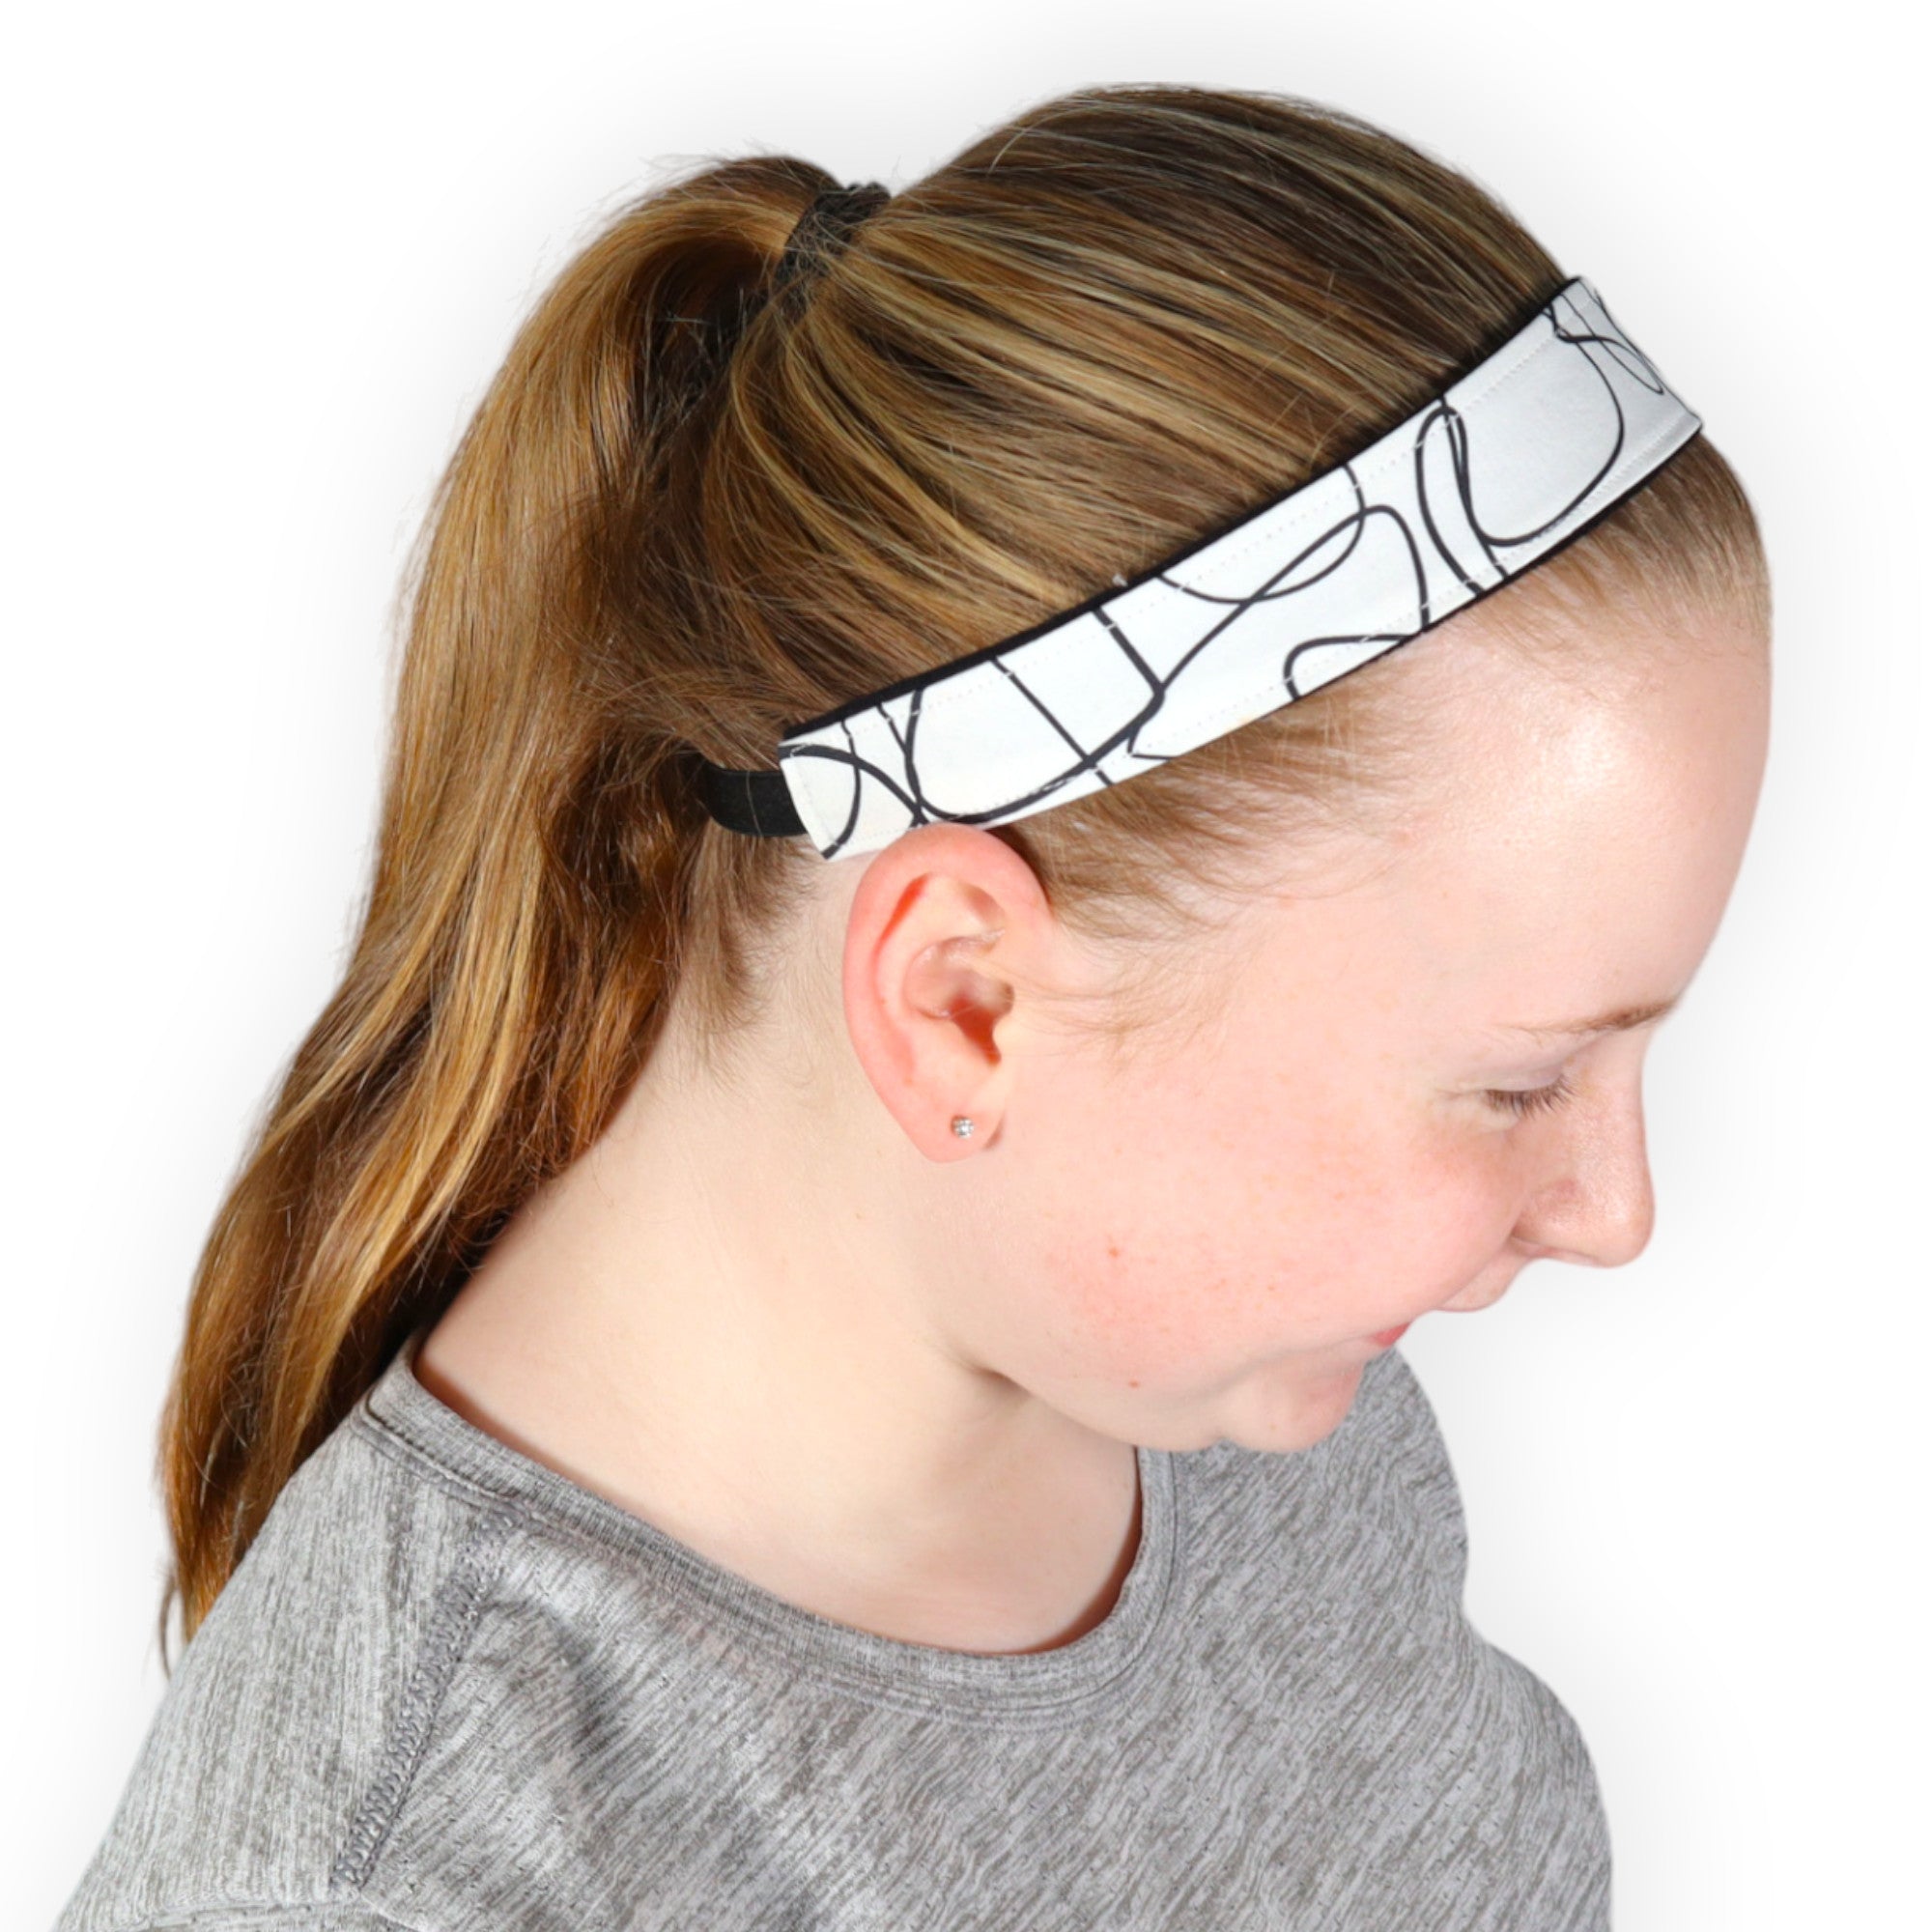 Headband Sewing KIt - Abstract Black - Makes 4 Headbands